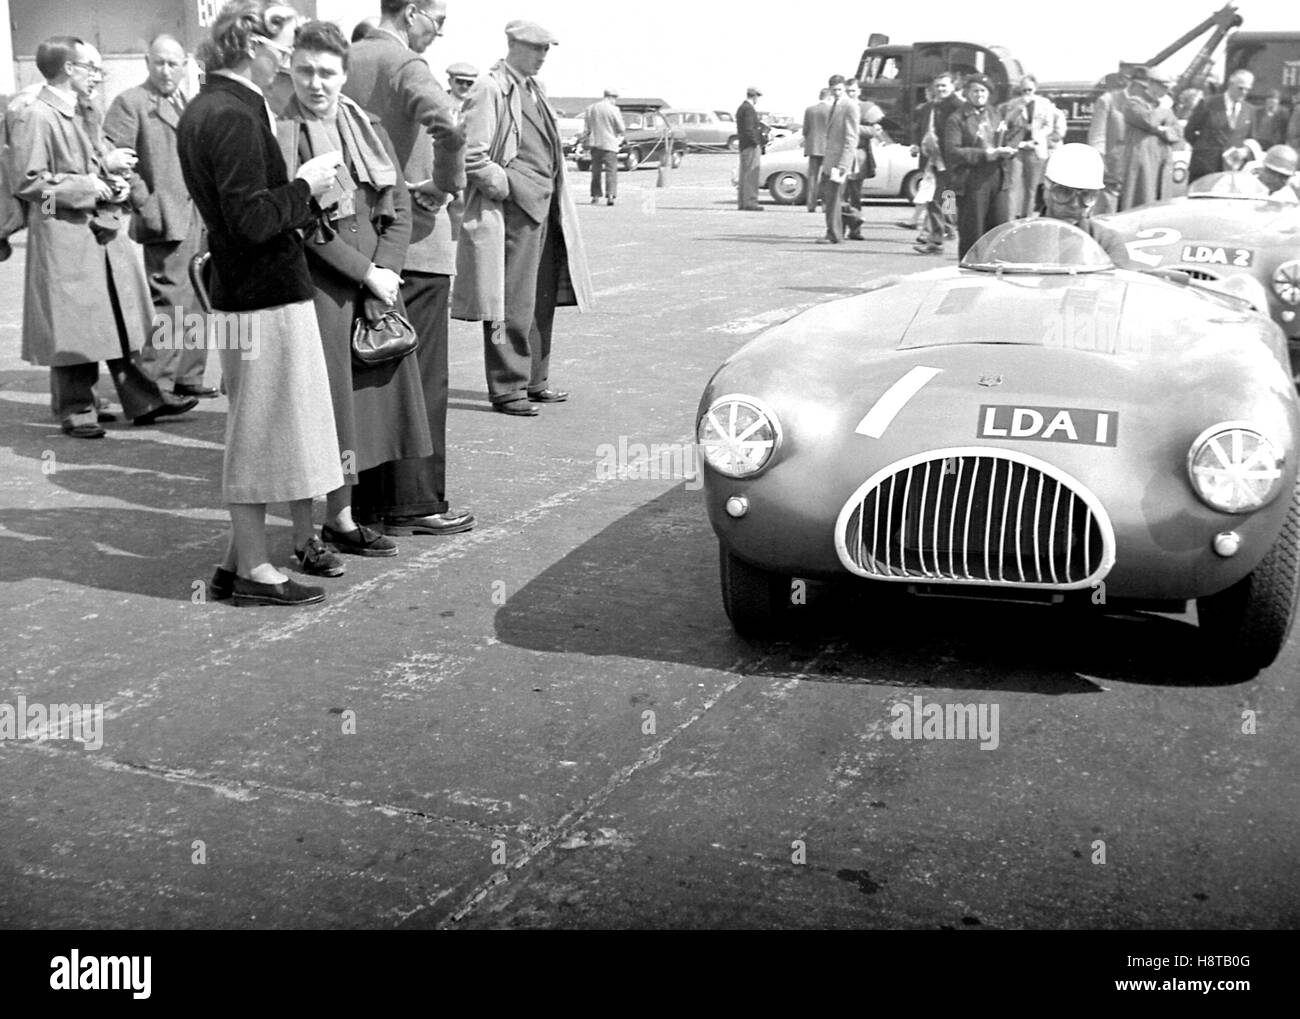 1954 SILVERSTONE KIEFT CENTRE SEAT SPORTS CARS Stock Photo